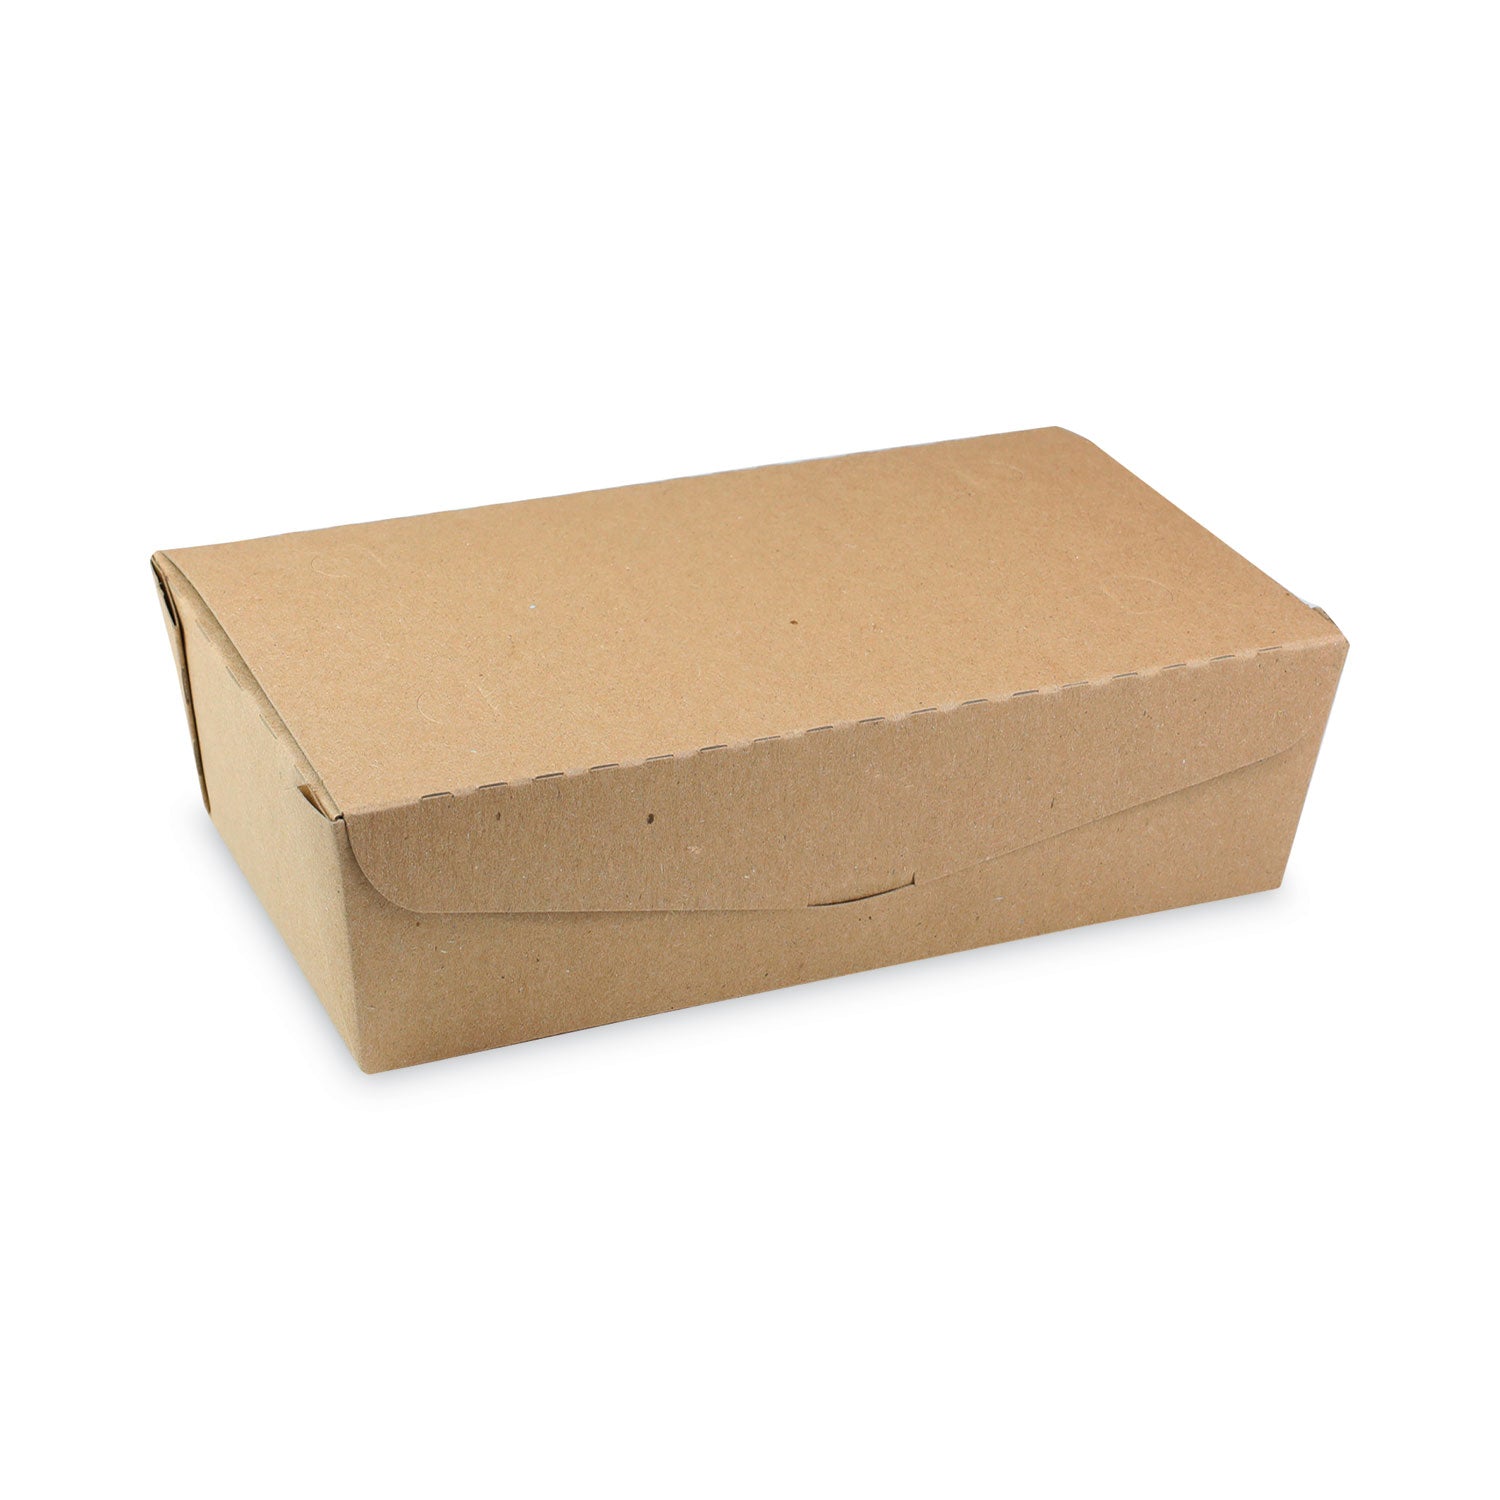 earthchoice-onebox-paper-box-77-oz-9-x-485-x-27-kraft-162-carton_pctnob04skec - 1